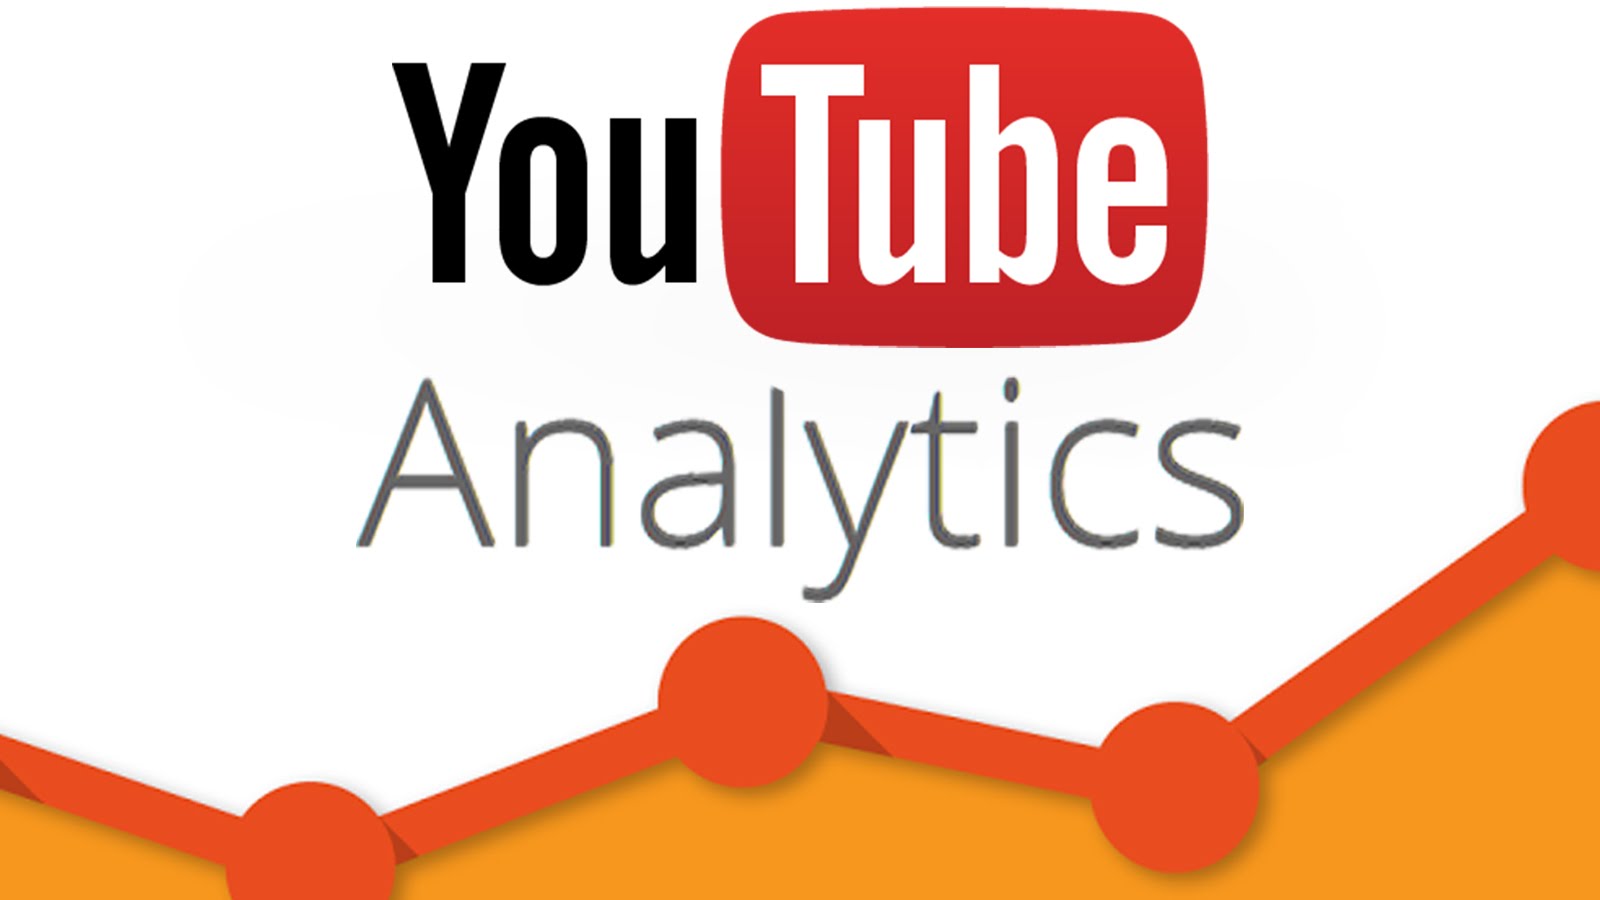 YouTube Analytic Tools